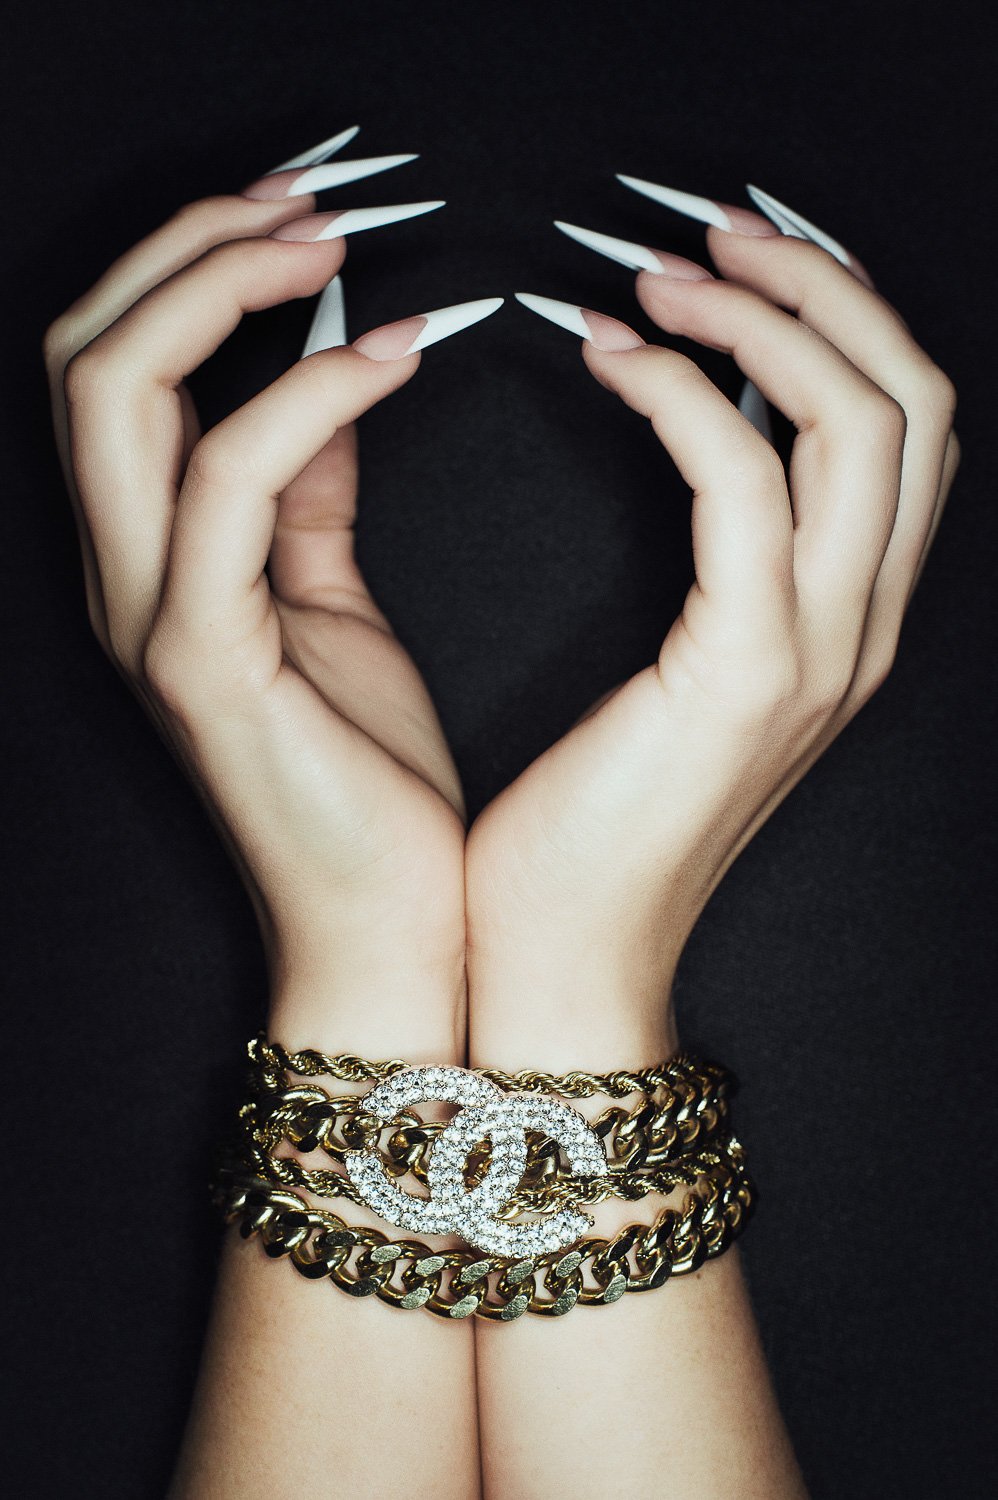 award-winning-nails-by-ania-kesiak-photographed-by-kris-kesiak-in-glasgow-01.jpg